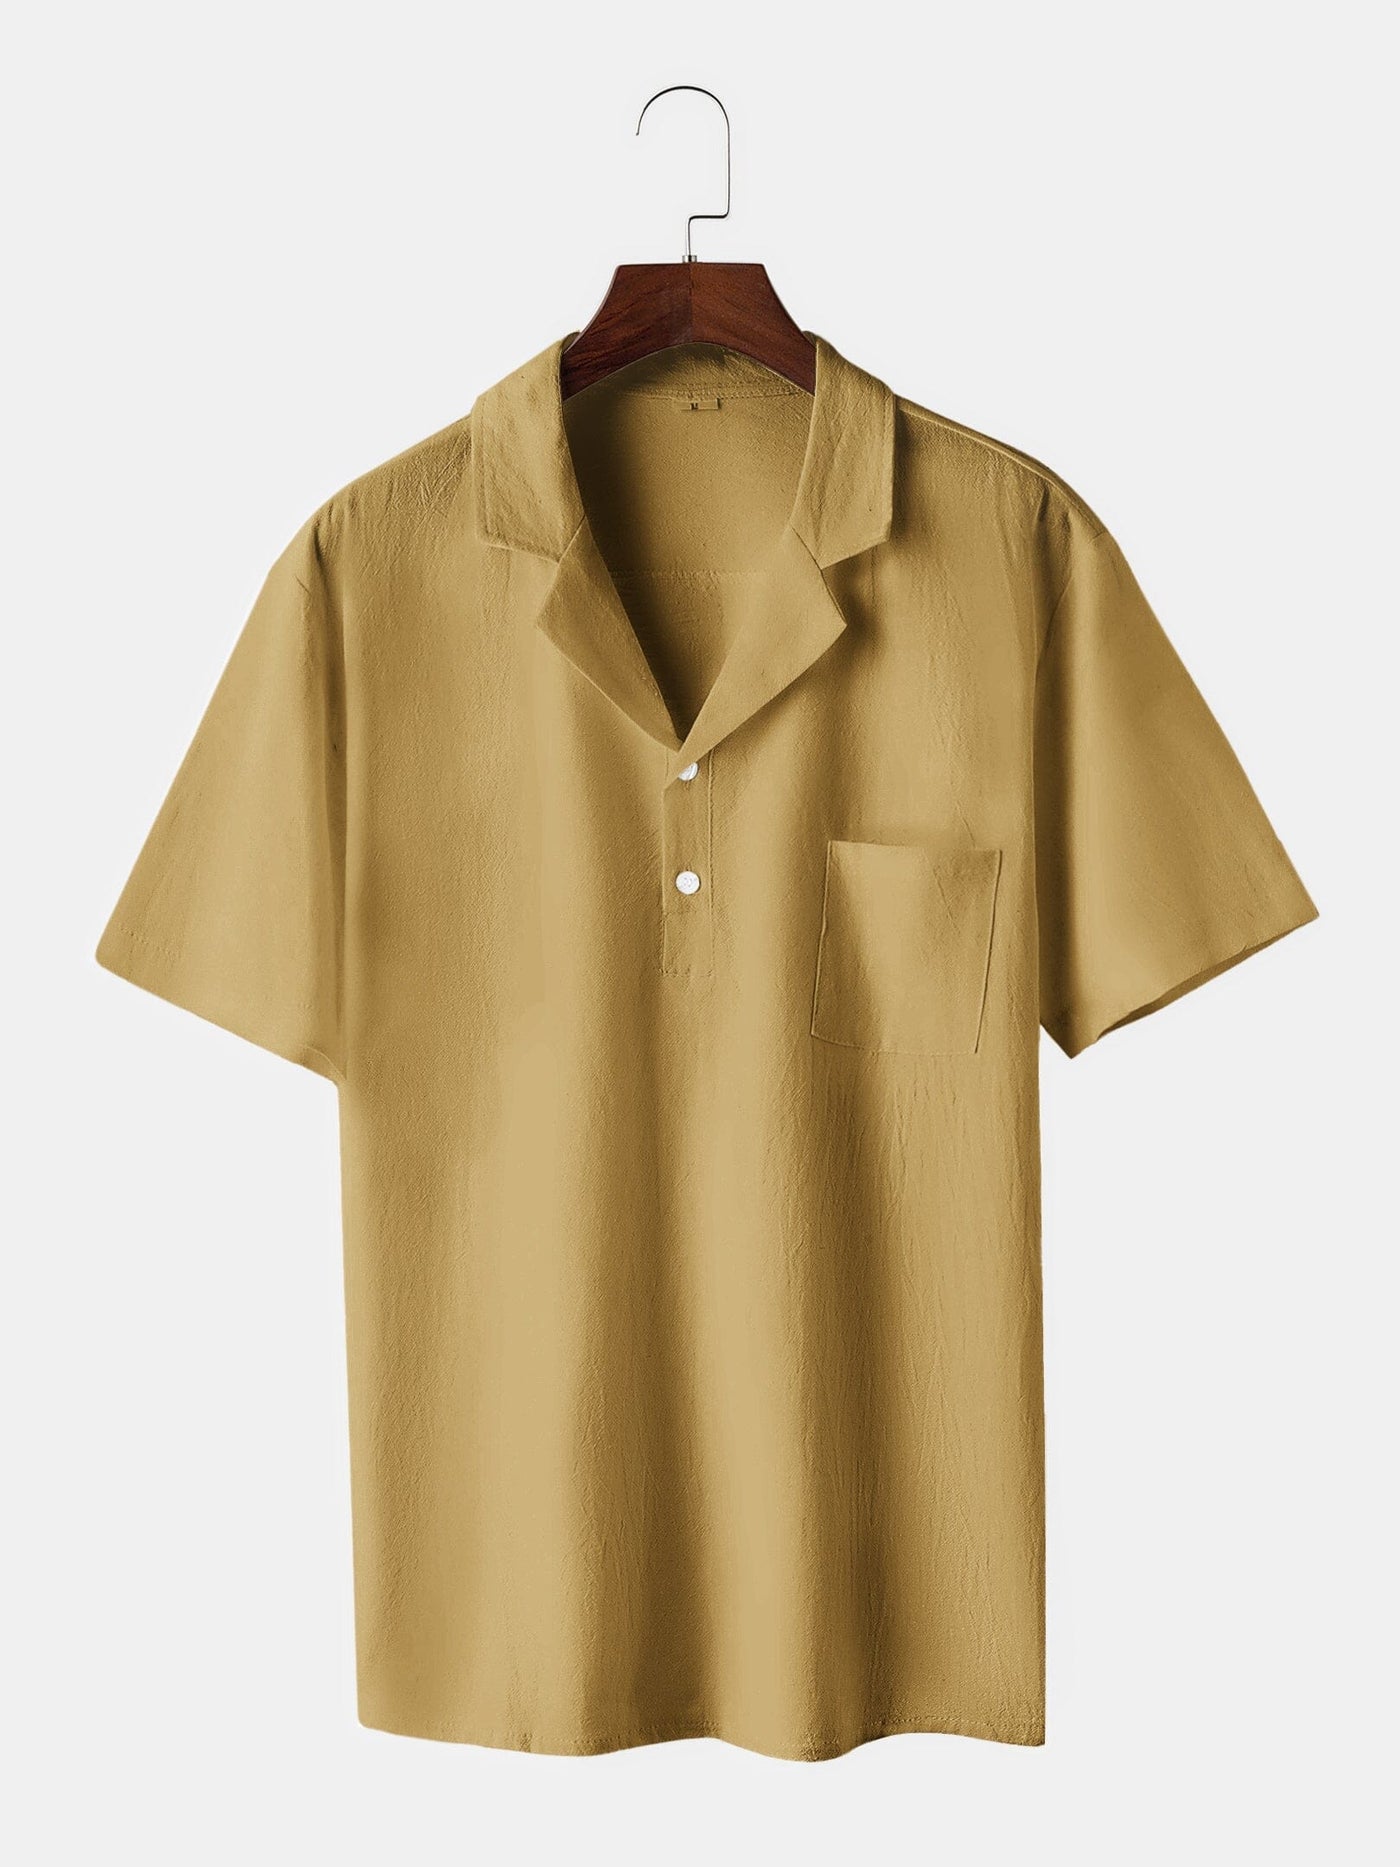 Coofandy Linen Style Vintage Shirt Shirts coofandystore Yellow S 